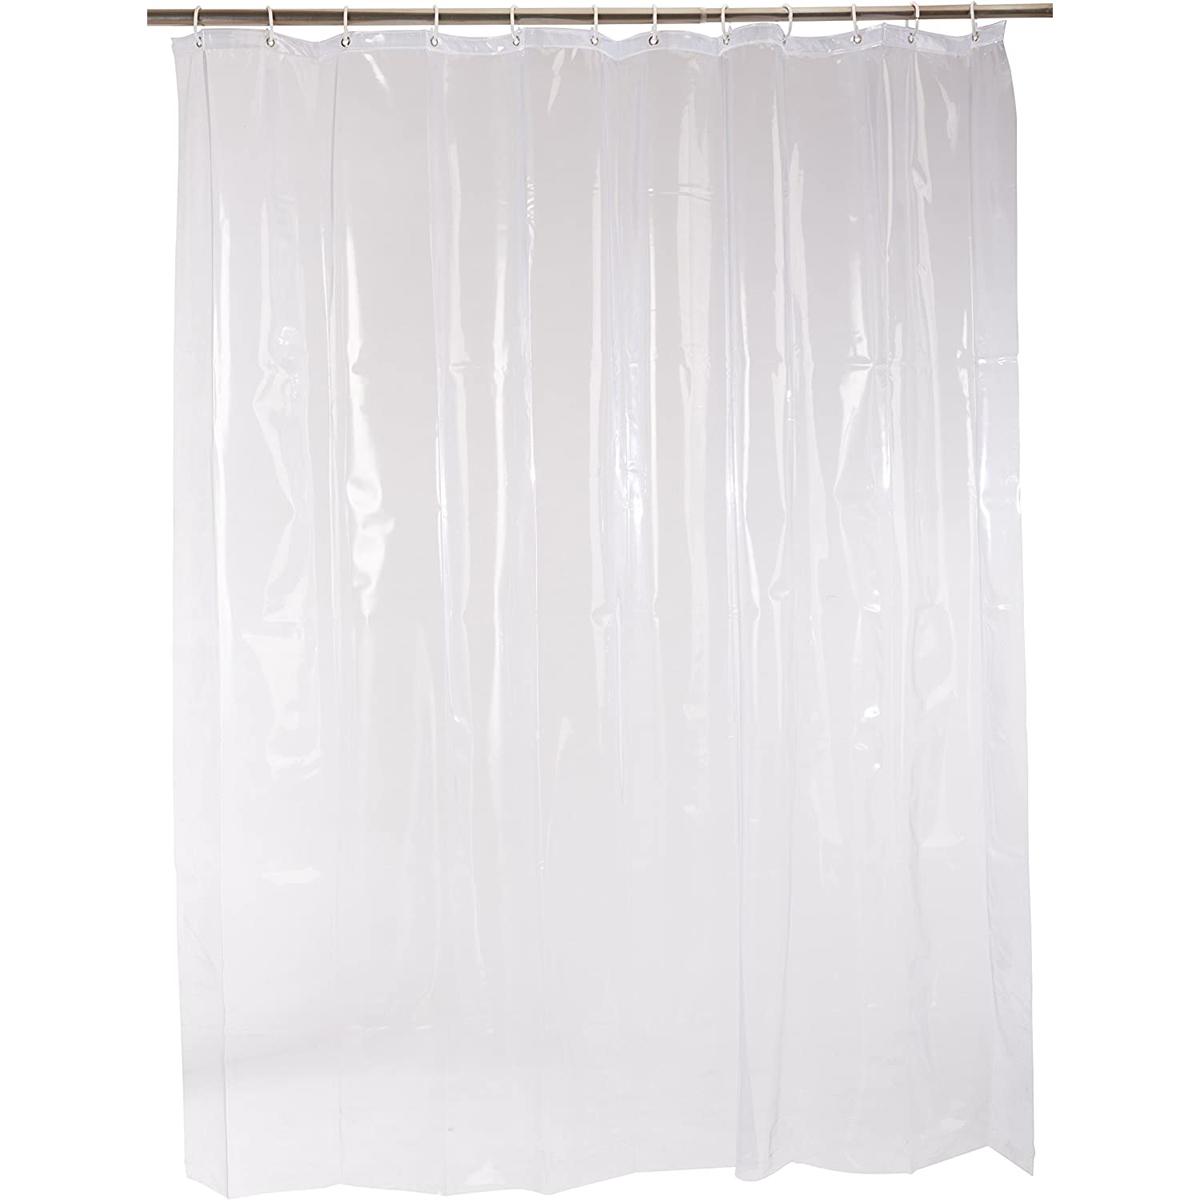 Amazon Basics Clear Vinyl Shower Curtain Liner for $2.92